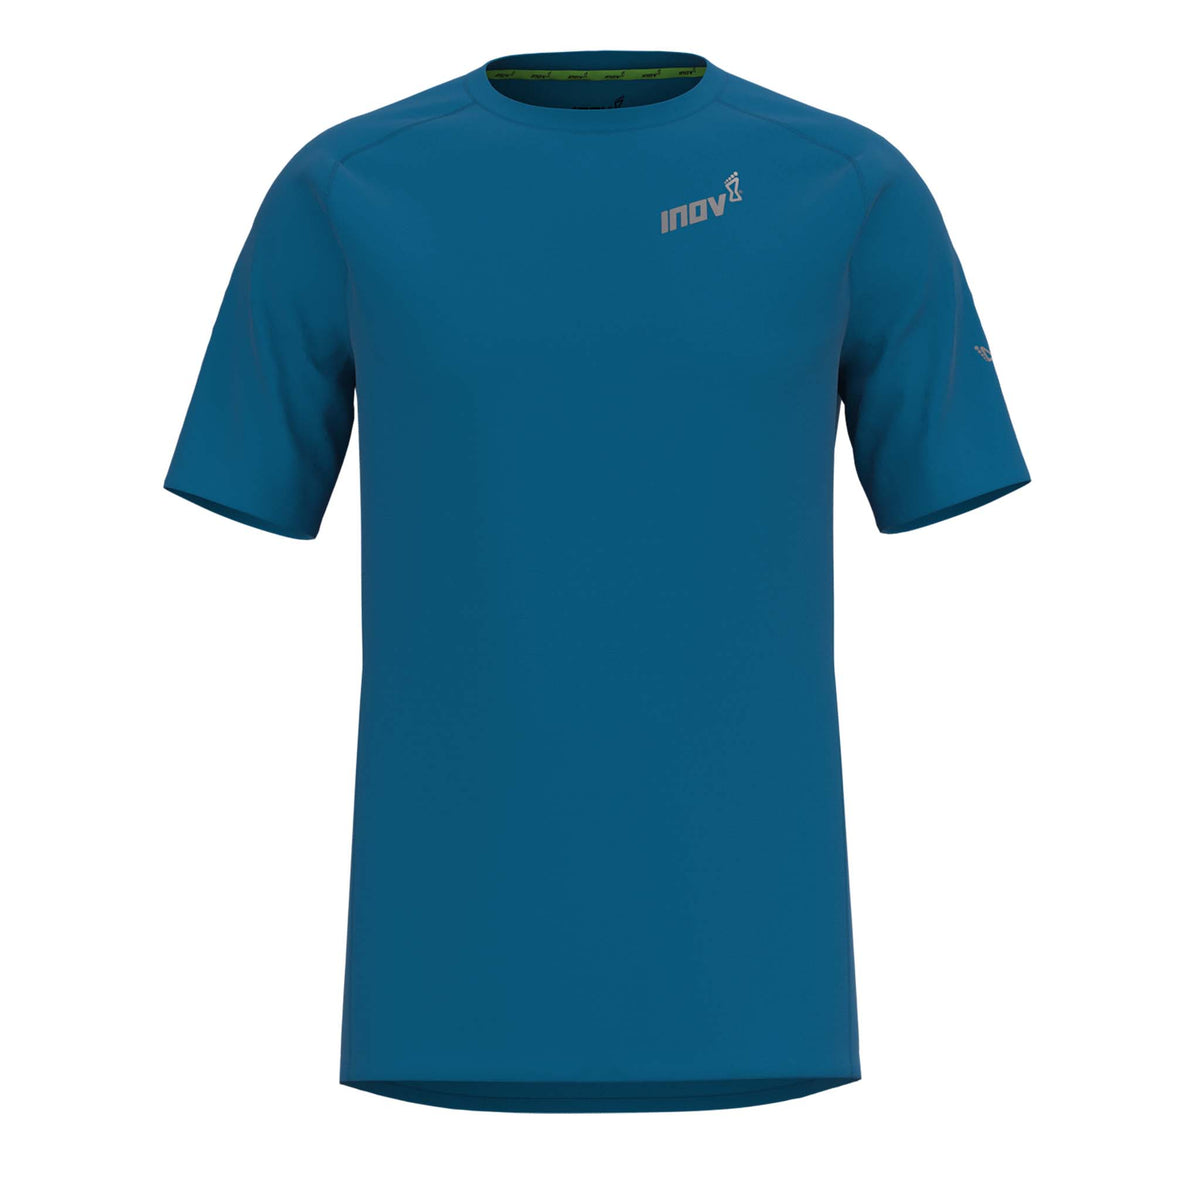 Inov-8 Base Elite Short Sleeve t-shirt de course a pied manches courtes bleu homme 2